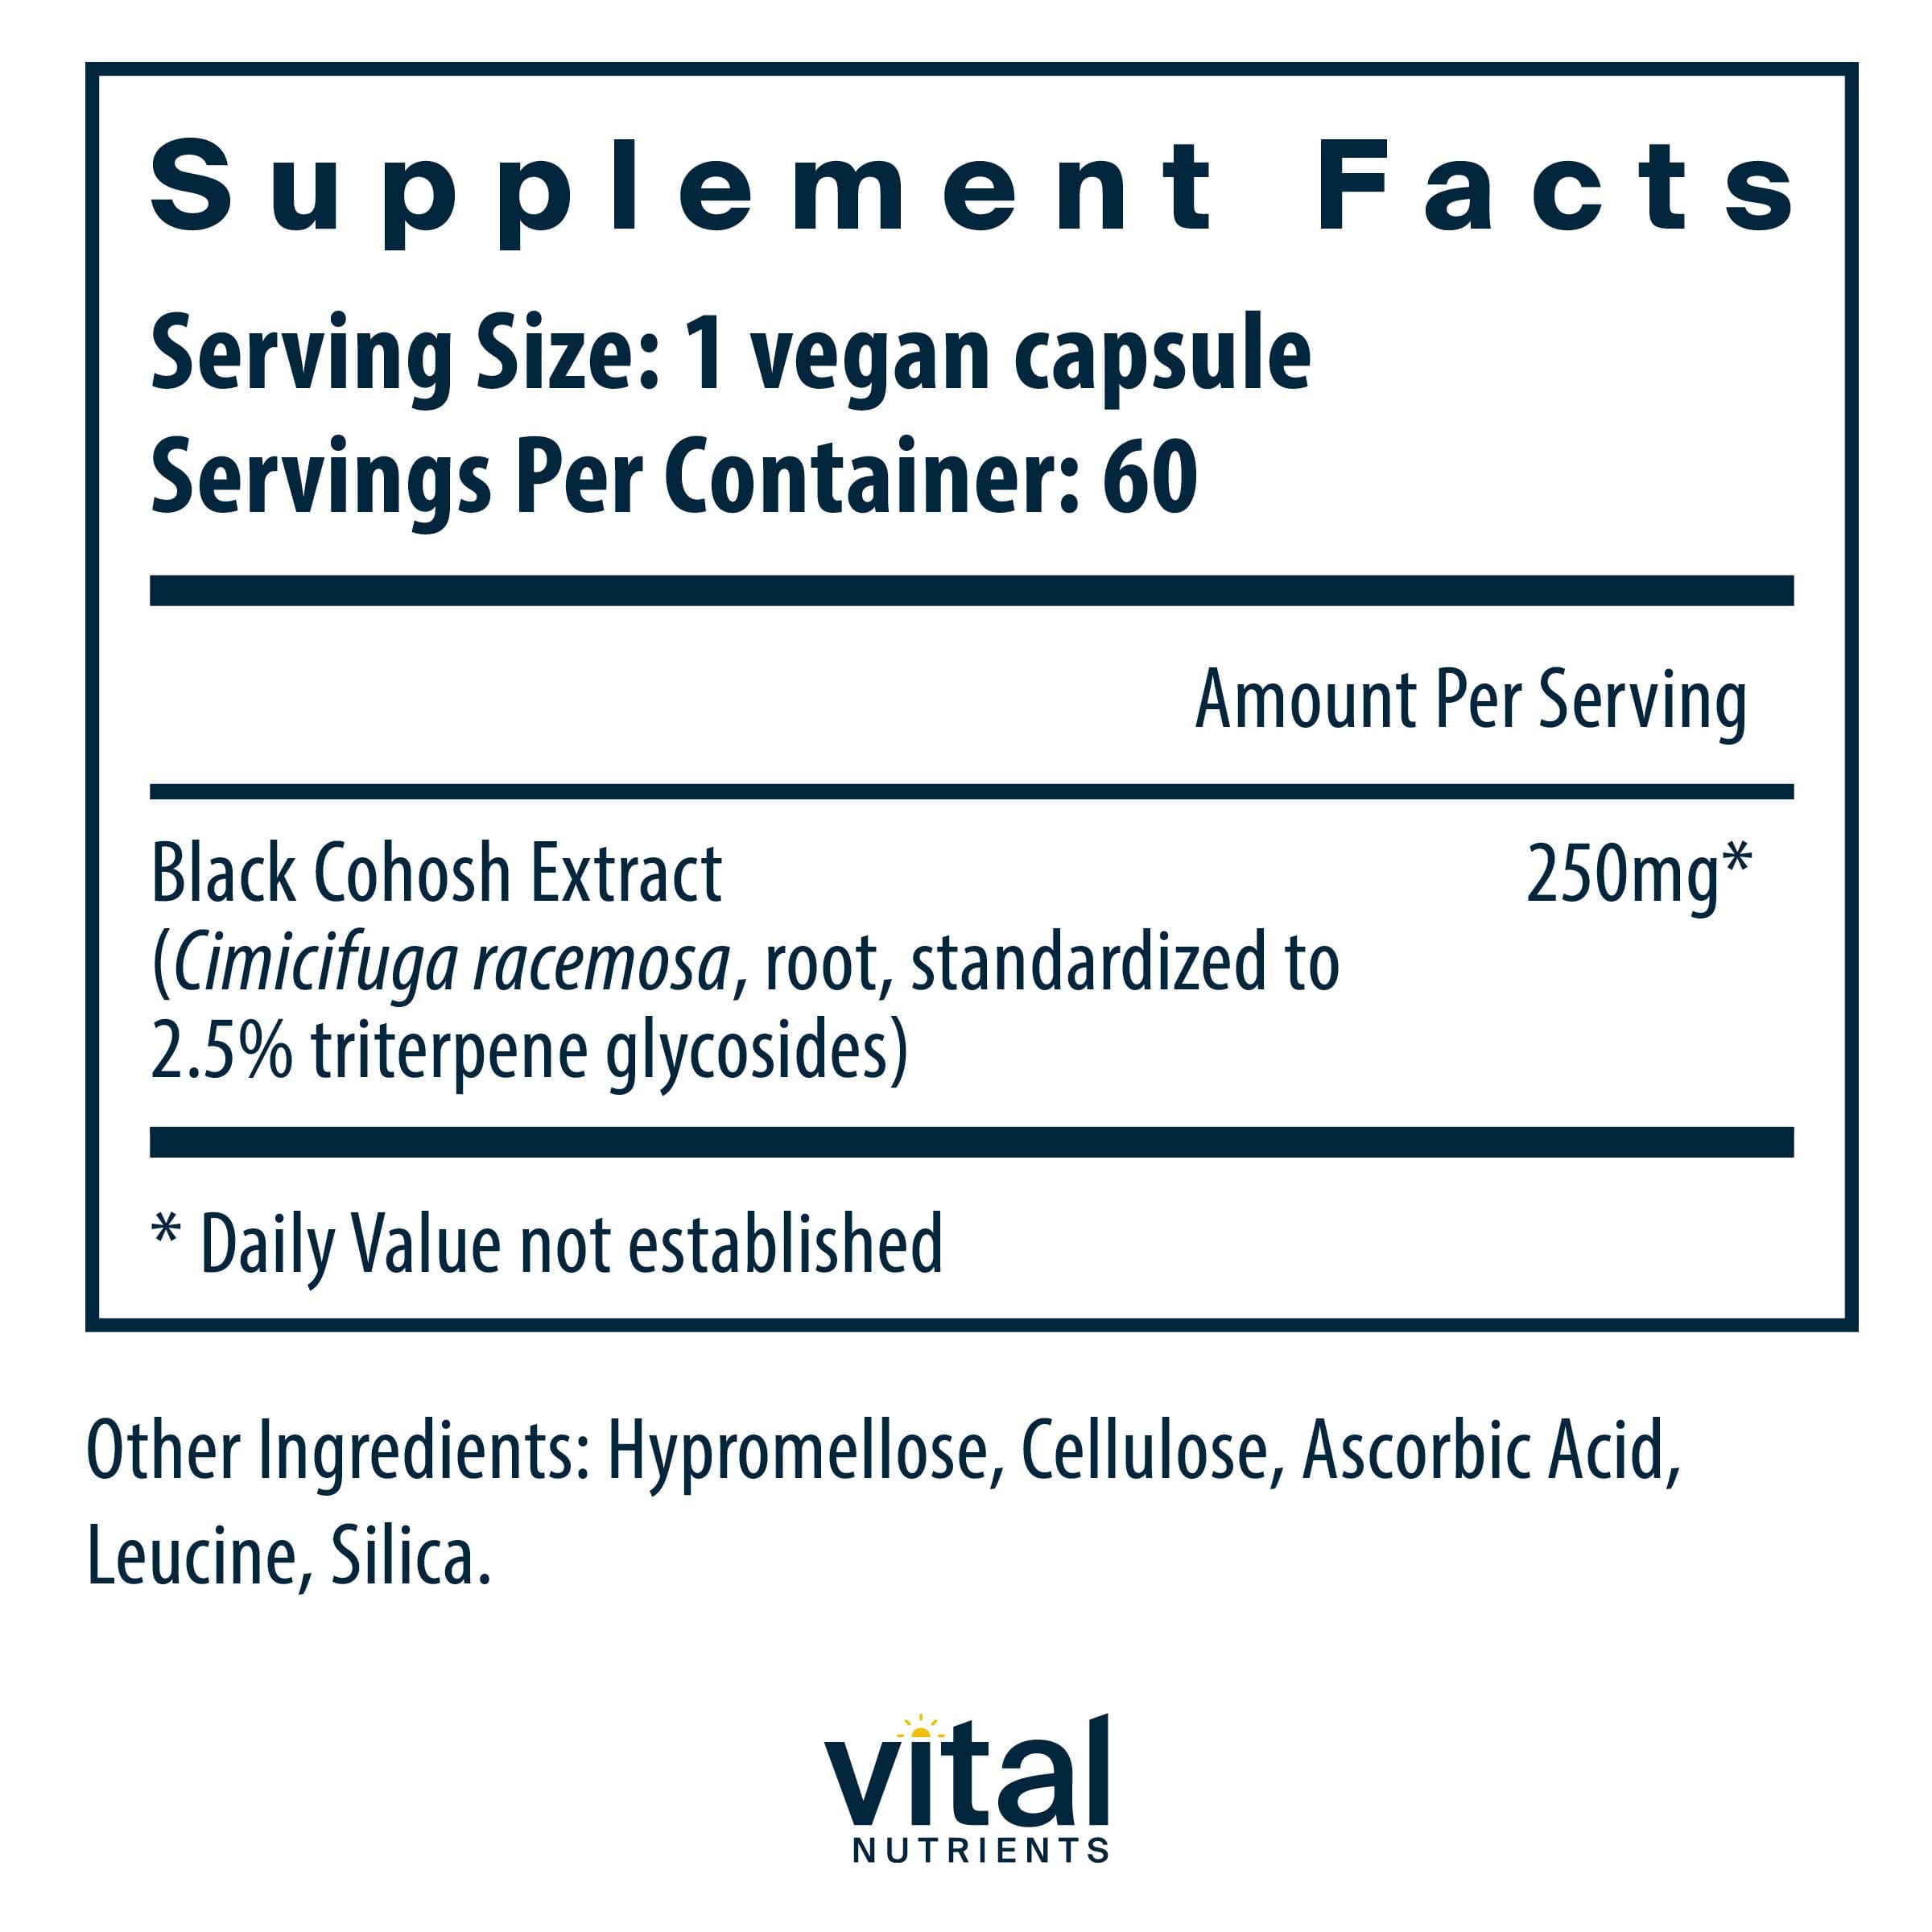 Vital Nutrients Black Cohosh Extract 250mg Ingredients